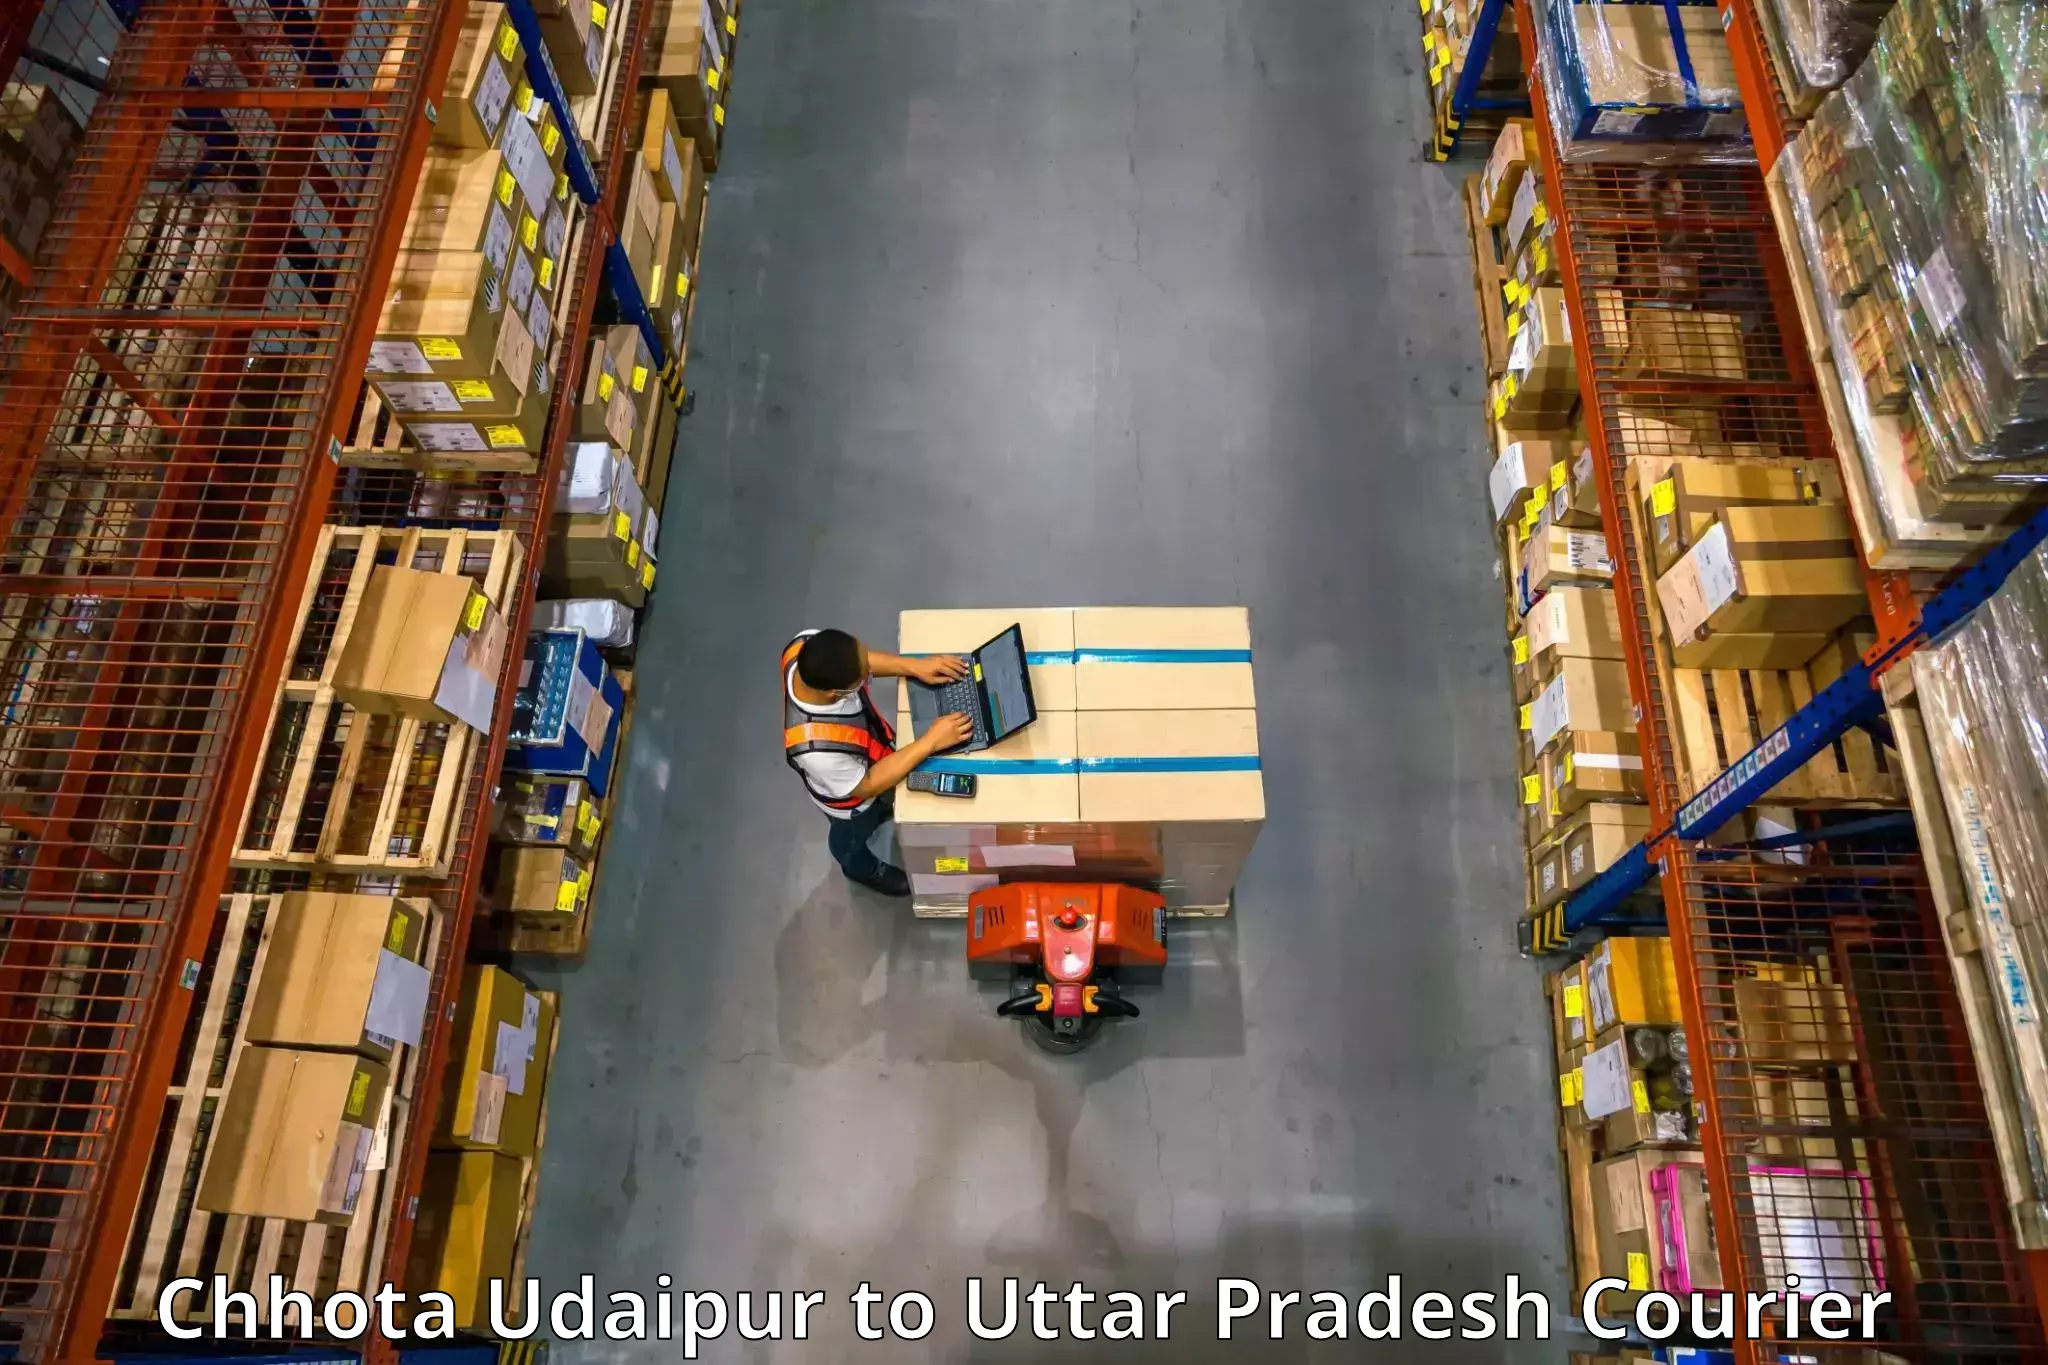 Furniture moving experts Chhota Udaipur to Uttar Pradesh